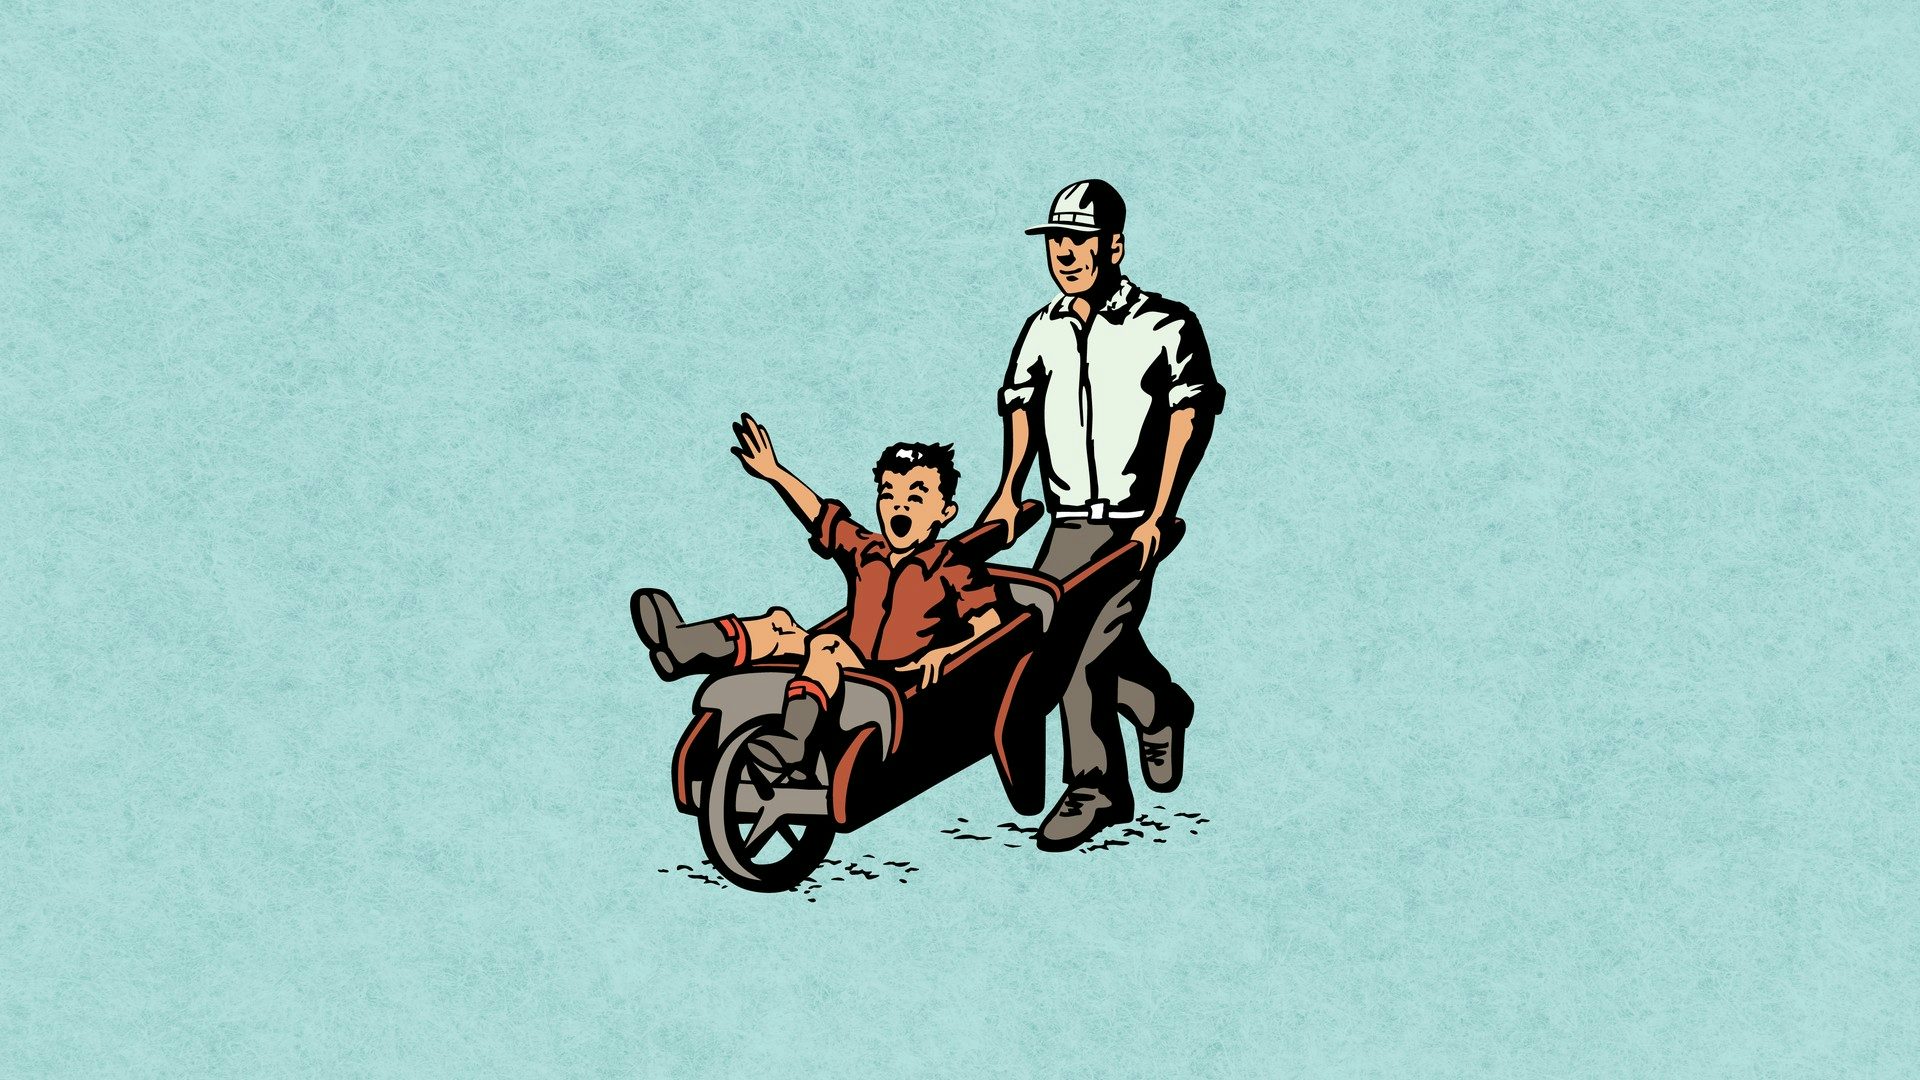 Graphic of man pushing child inside wooden wheelbarrow